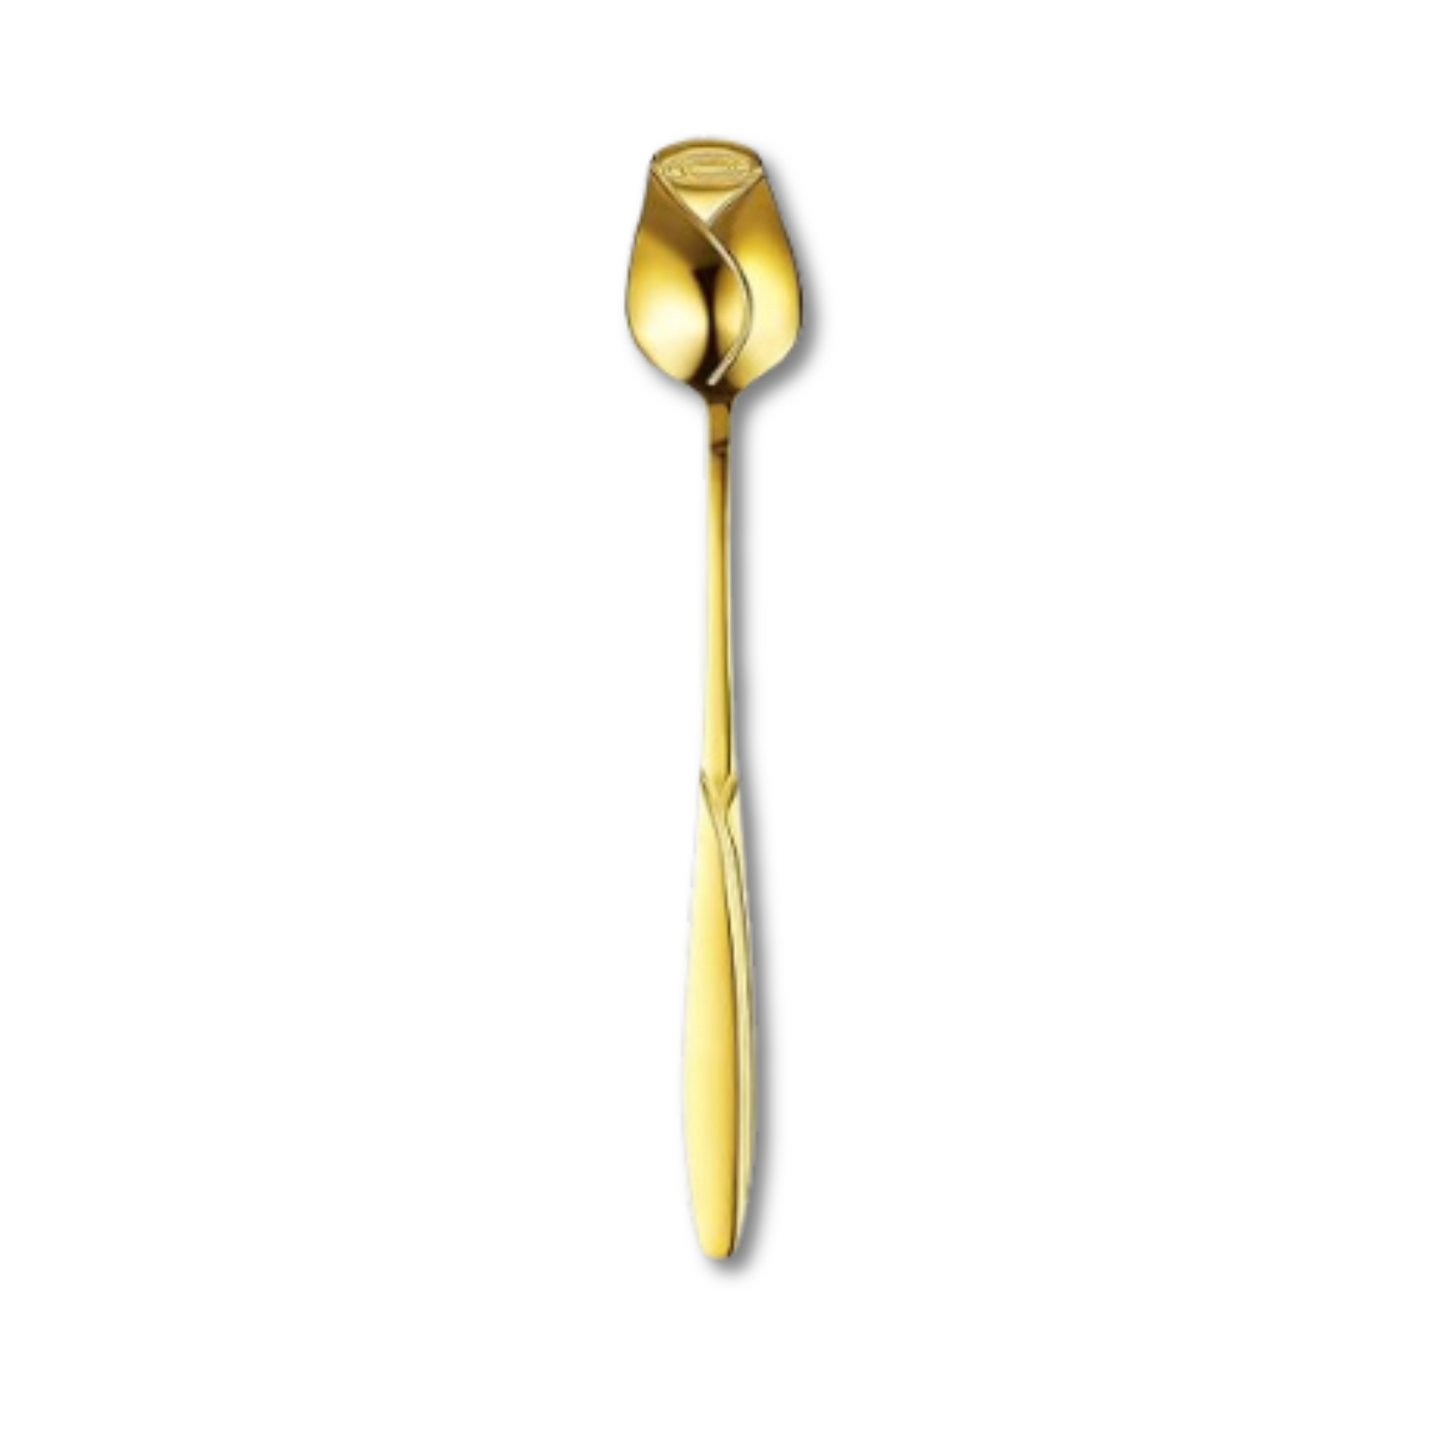 Gold rose flower teaspoon